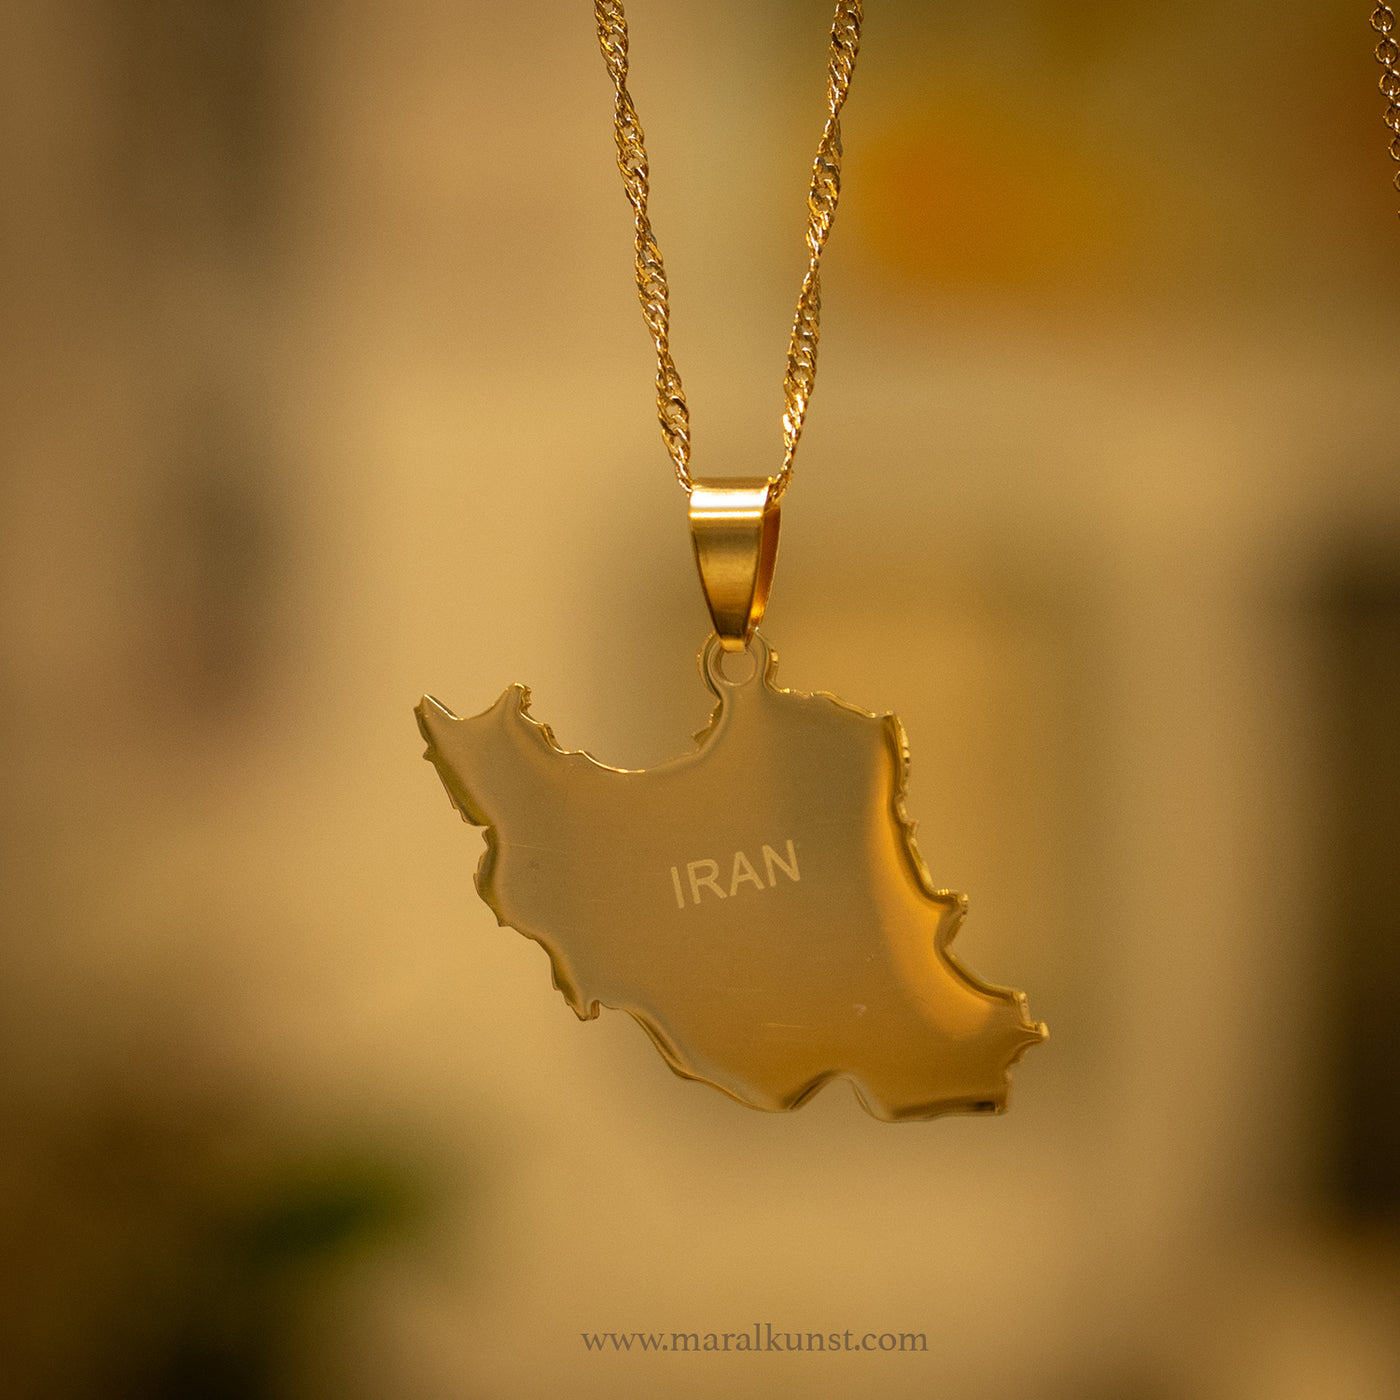 Free Iran necklace